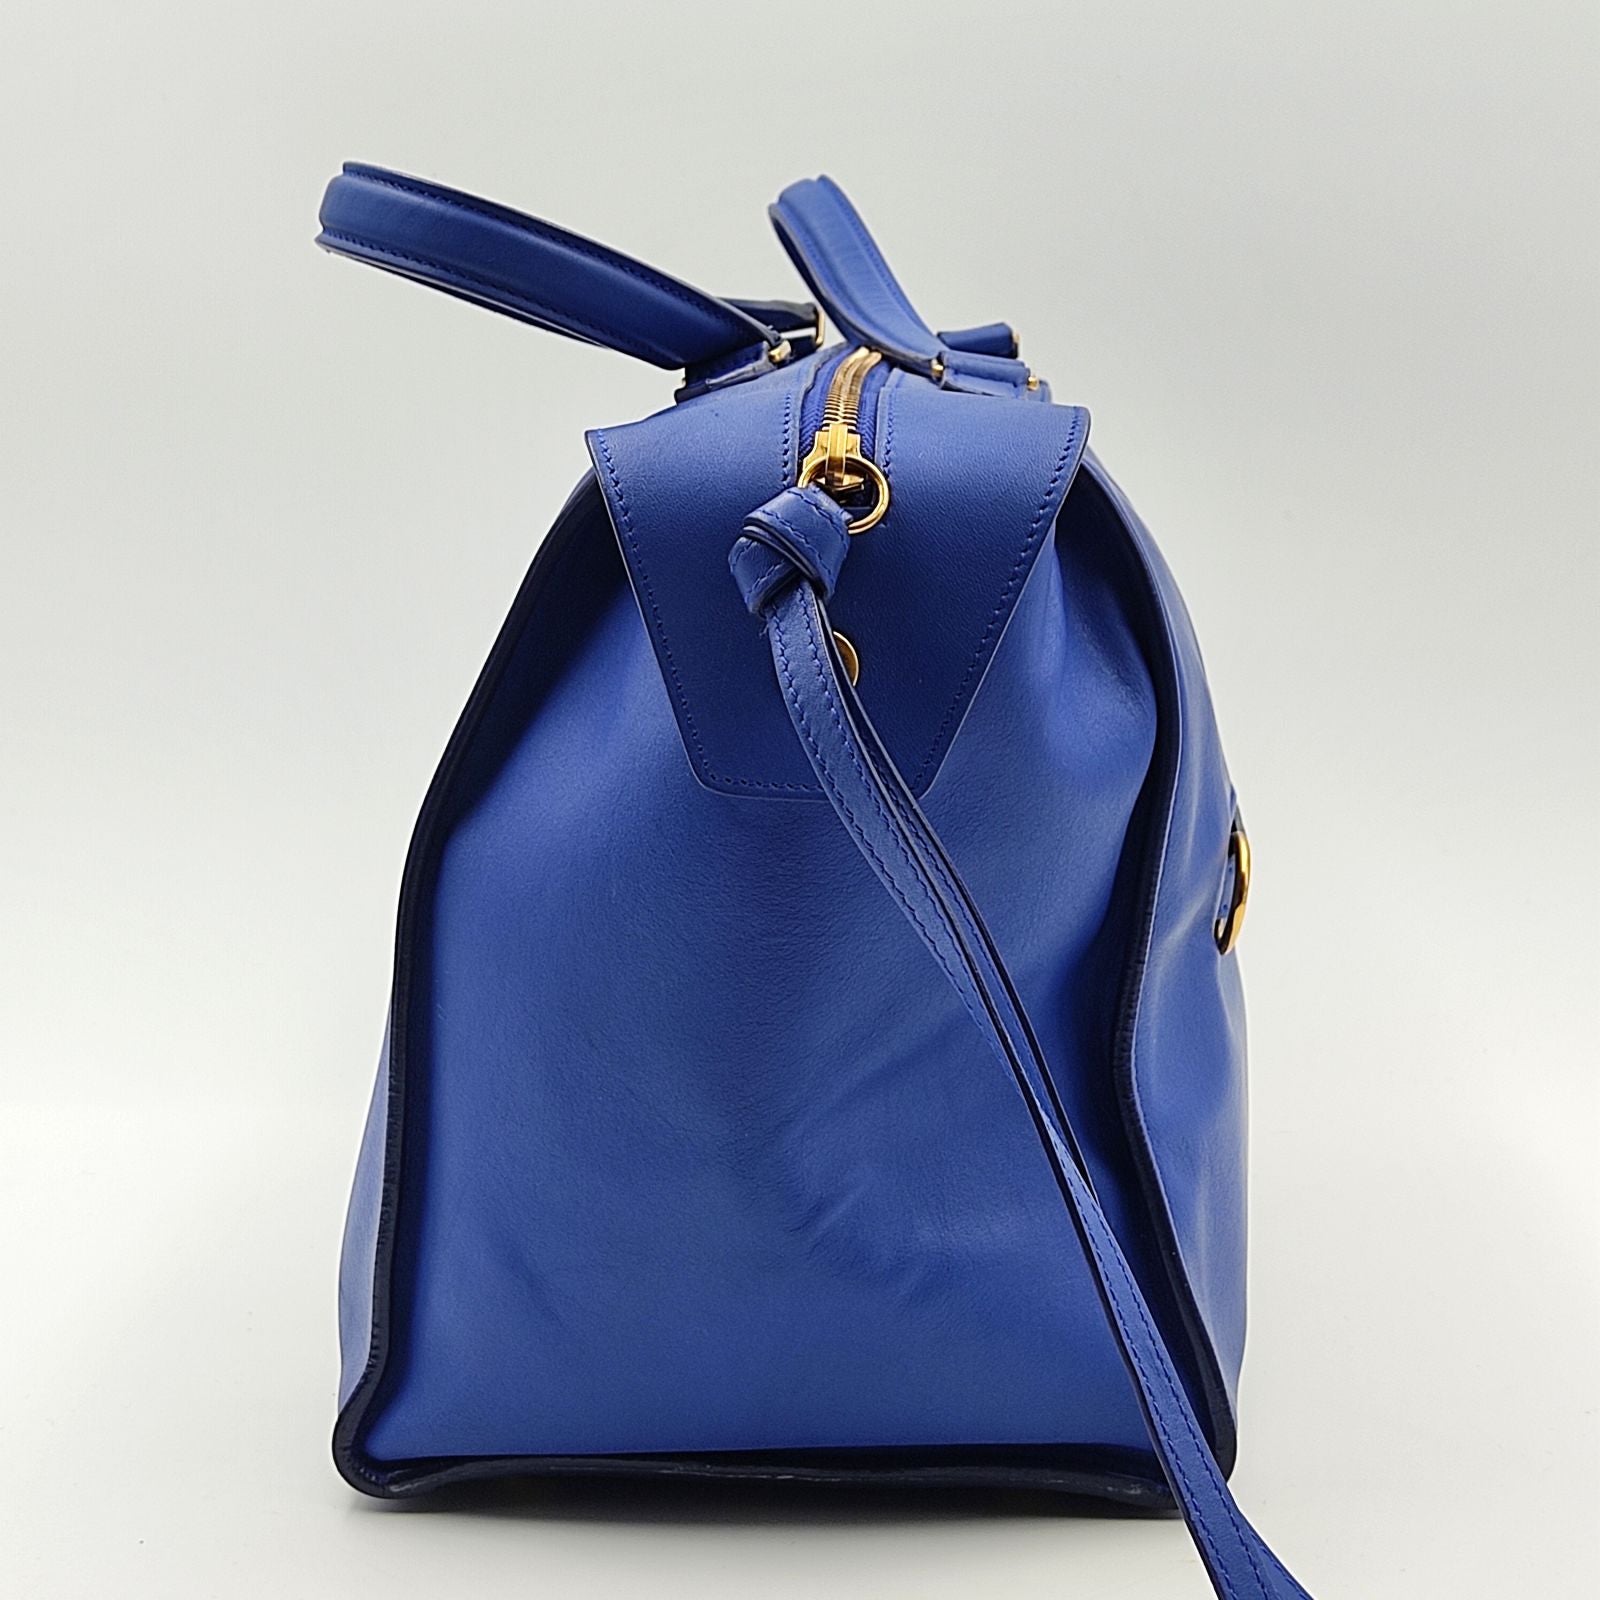 CELINE Celine Celine Ring handbag in light blue leather